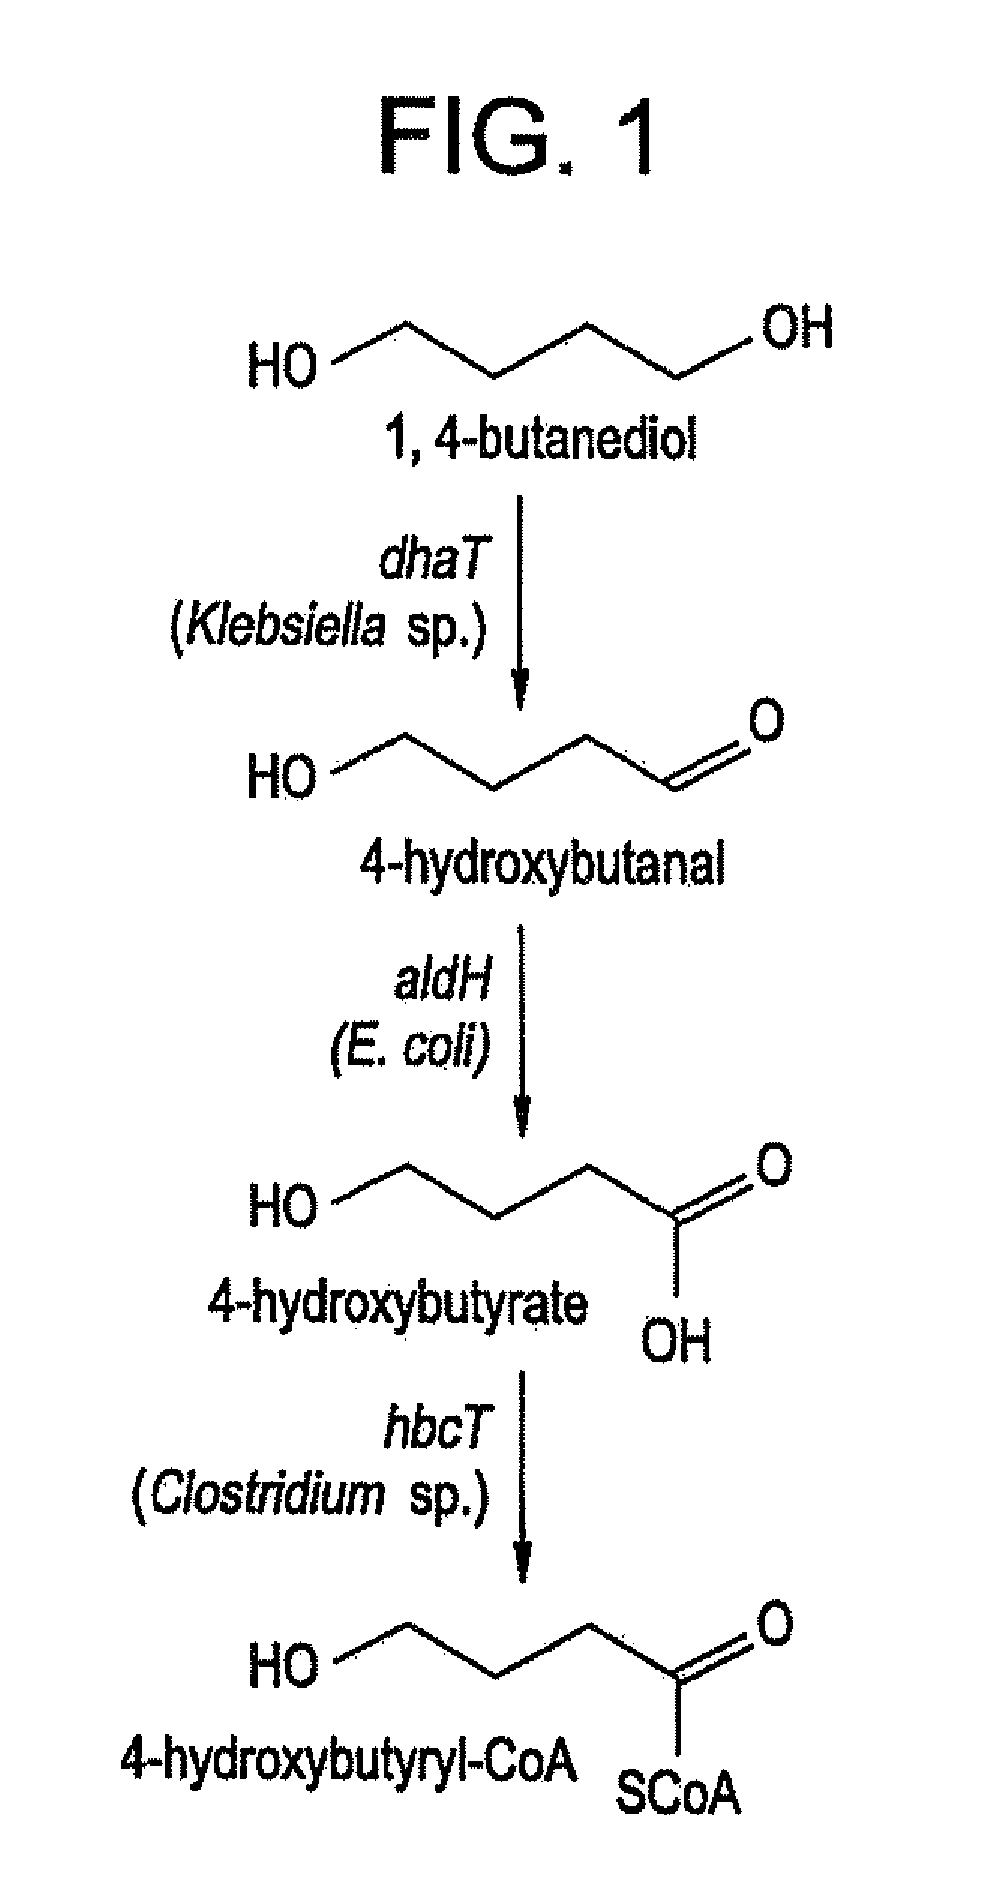 Production of Polyhydroxyalkanoates From Polyols